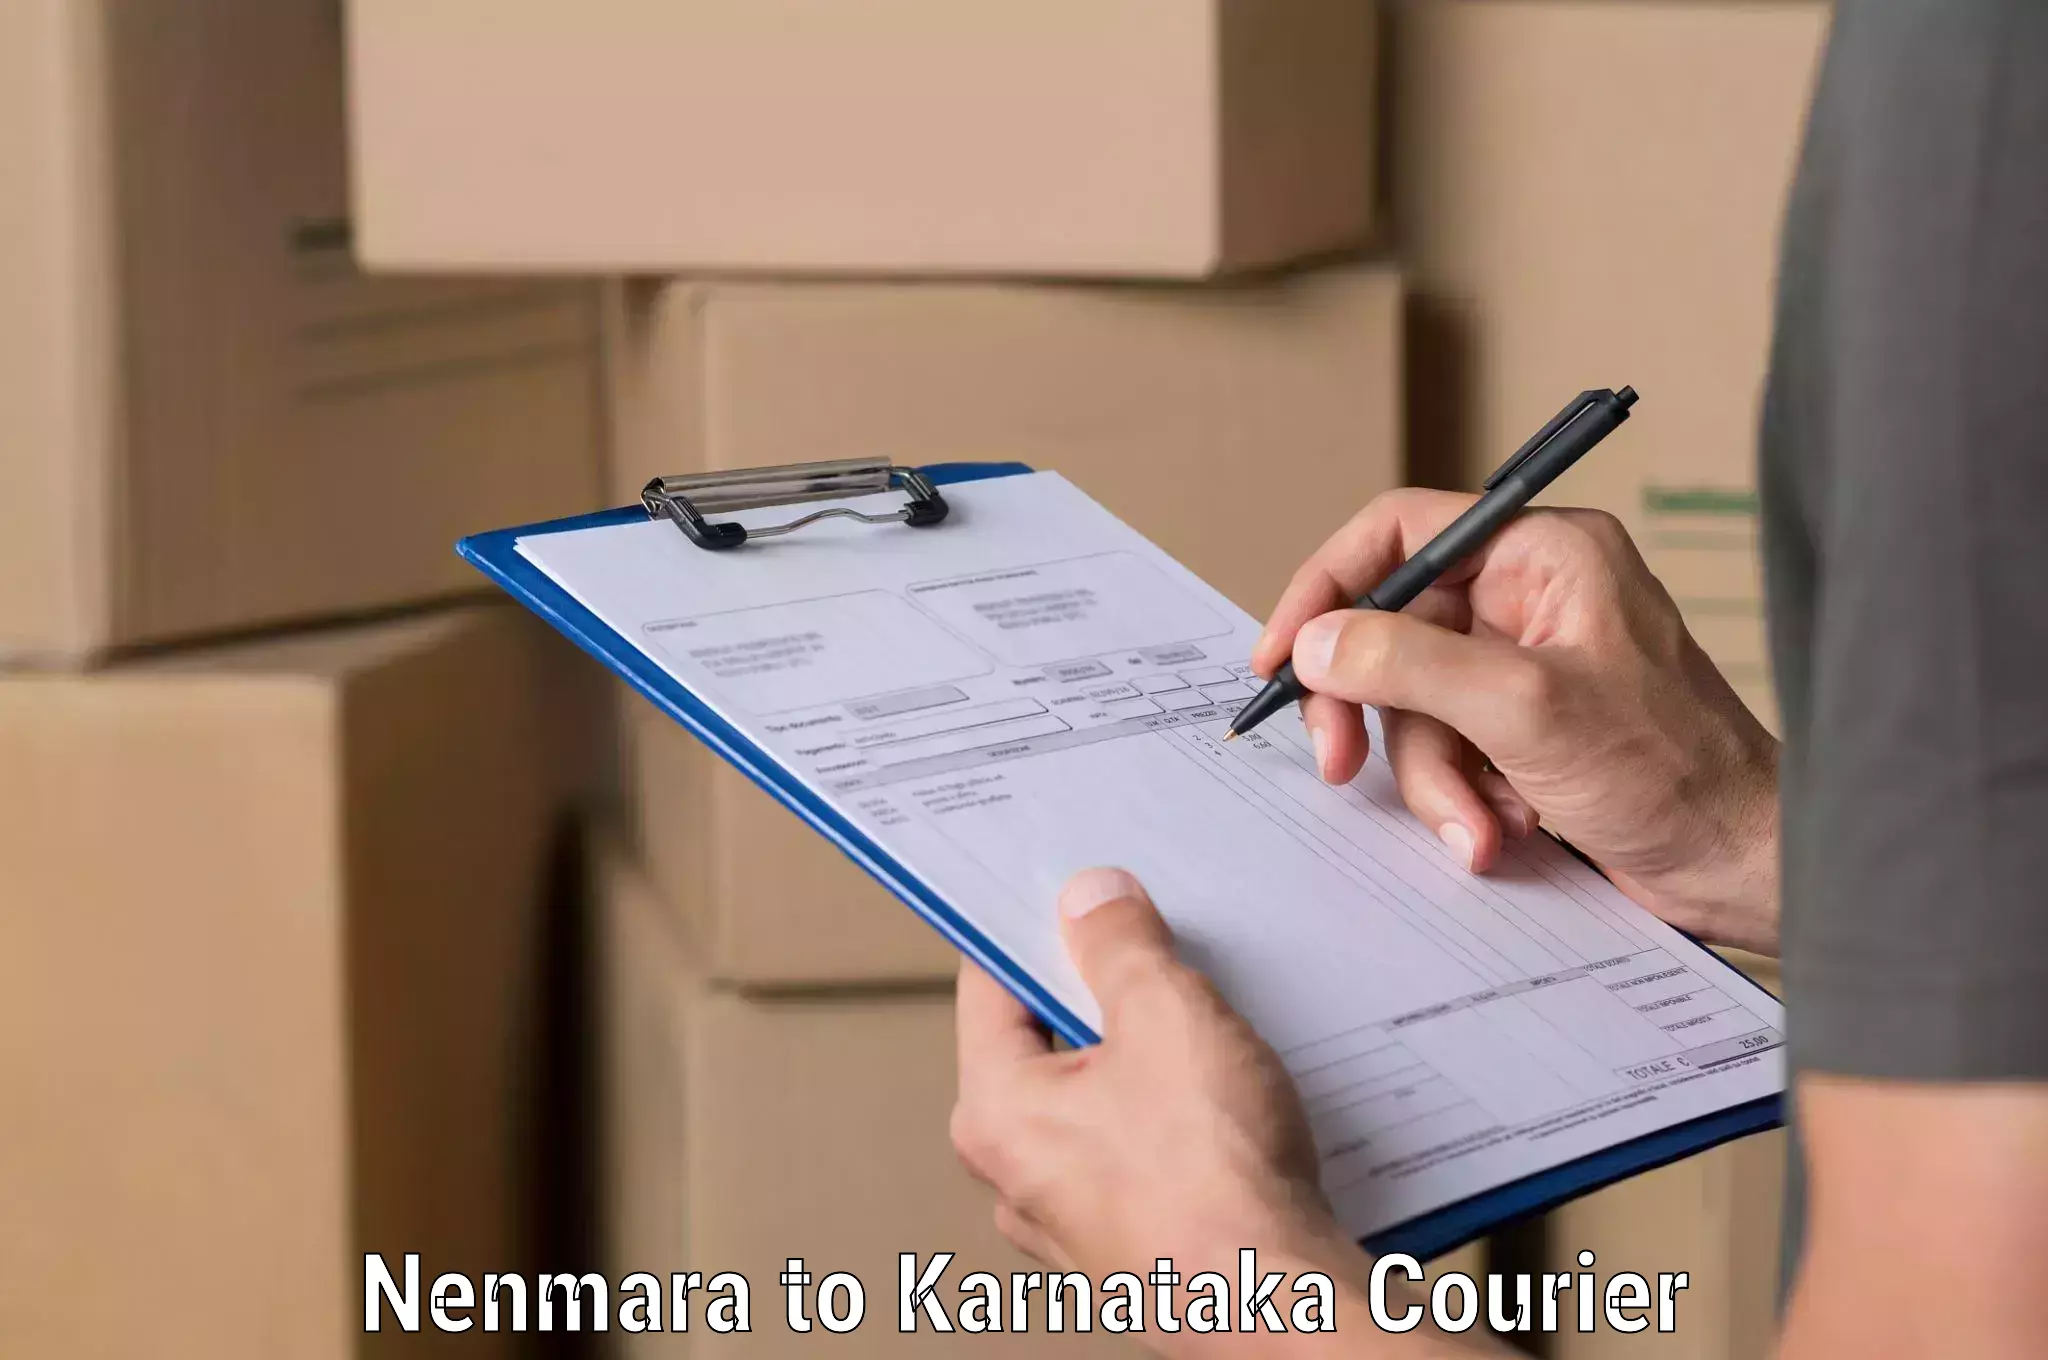 Medical delivery services Nenmara to Karnataka